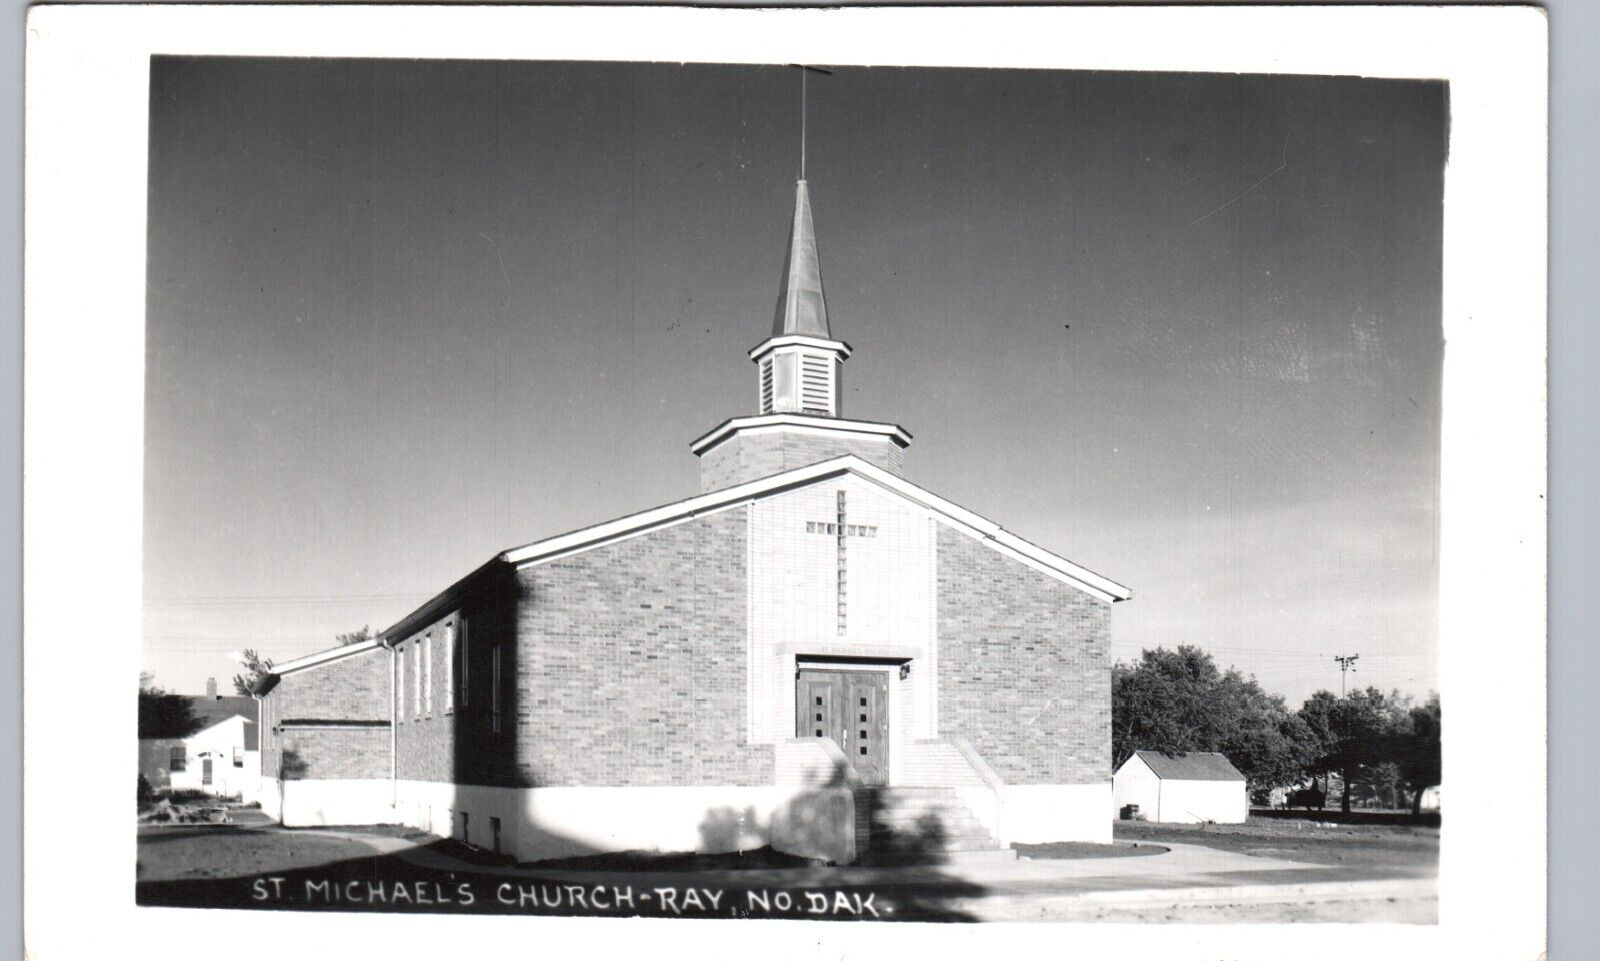 ST MICHAELS CHURCH ray nd real photo postcard rppc north dakota history